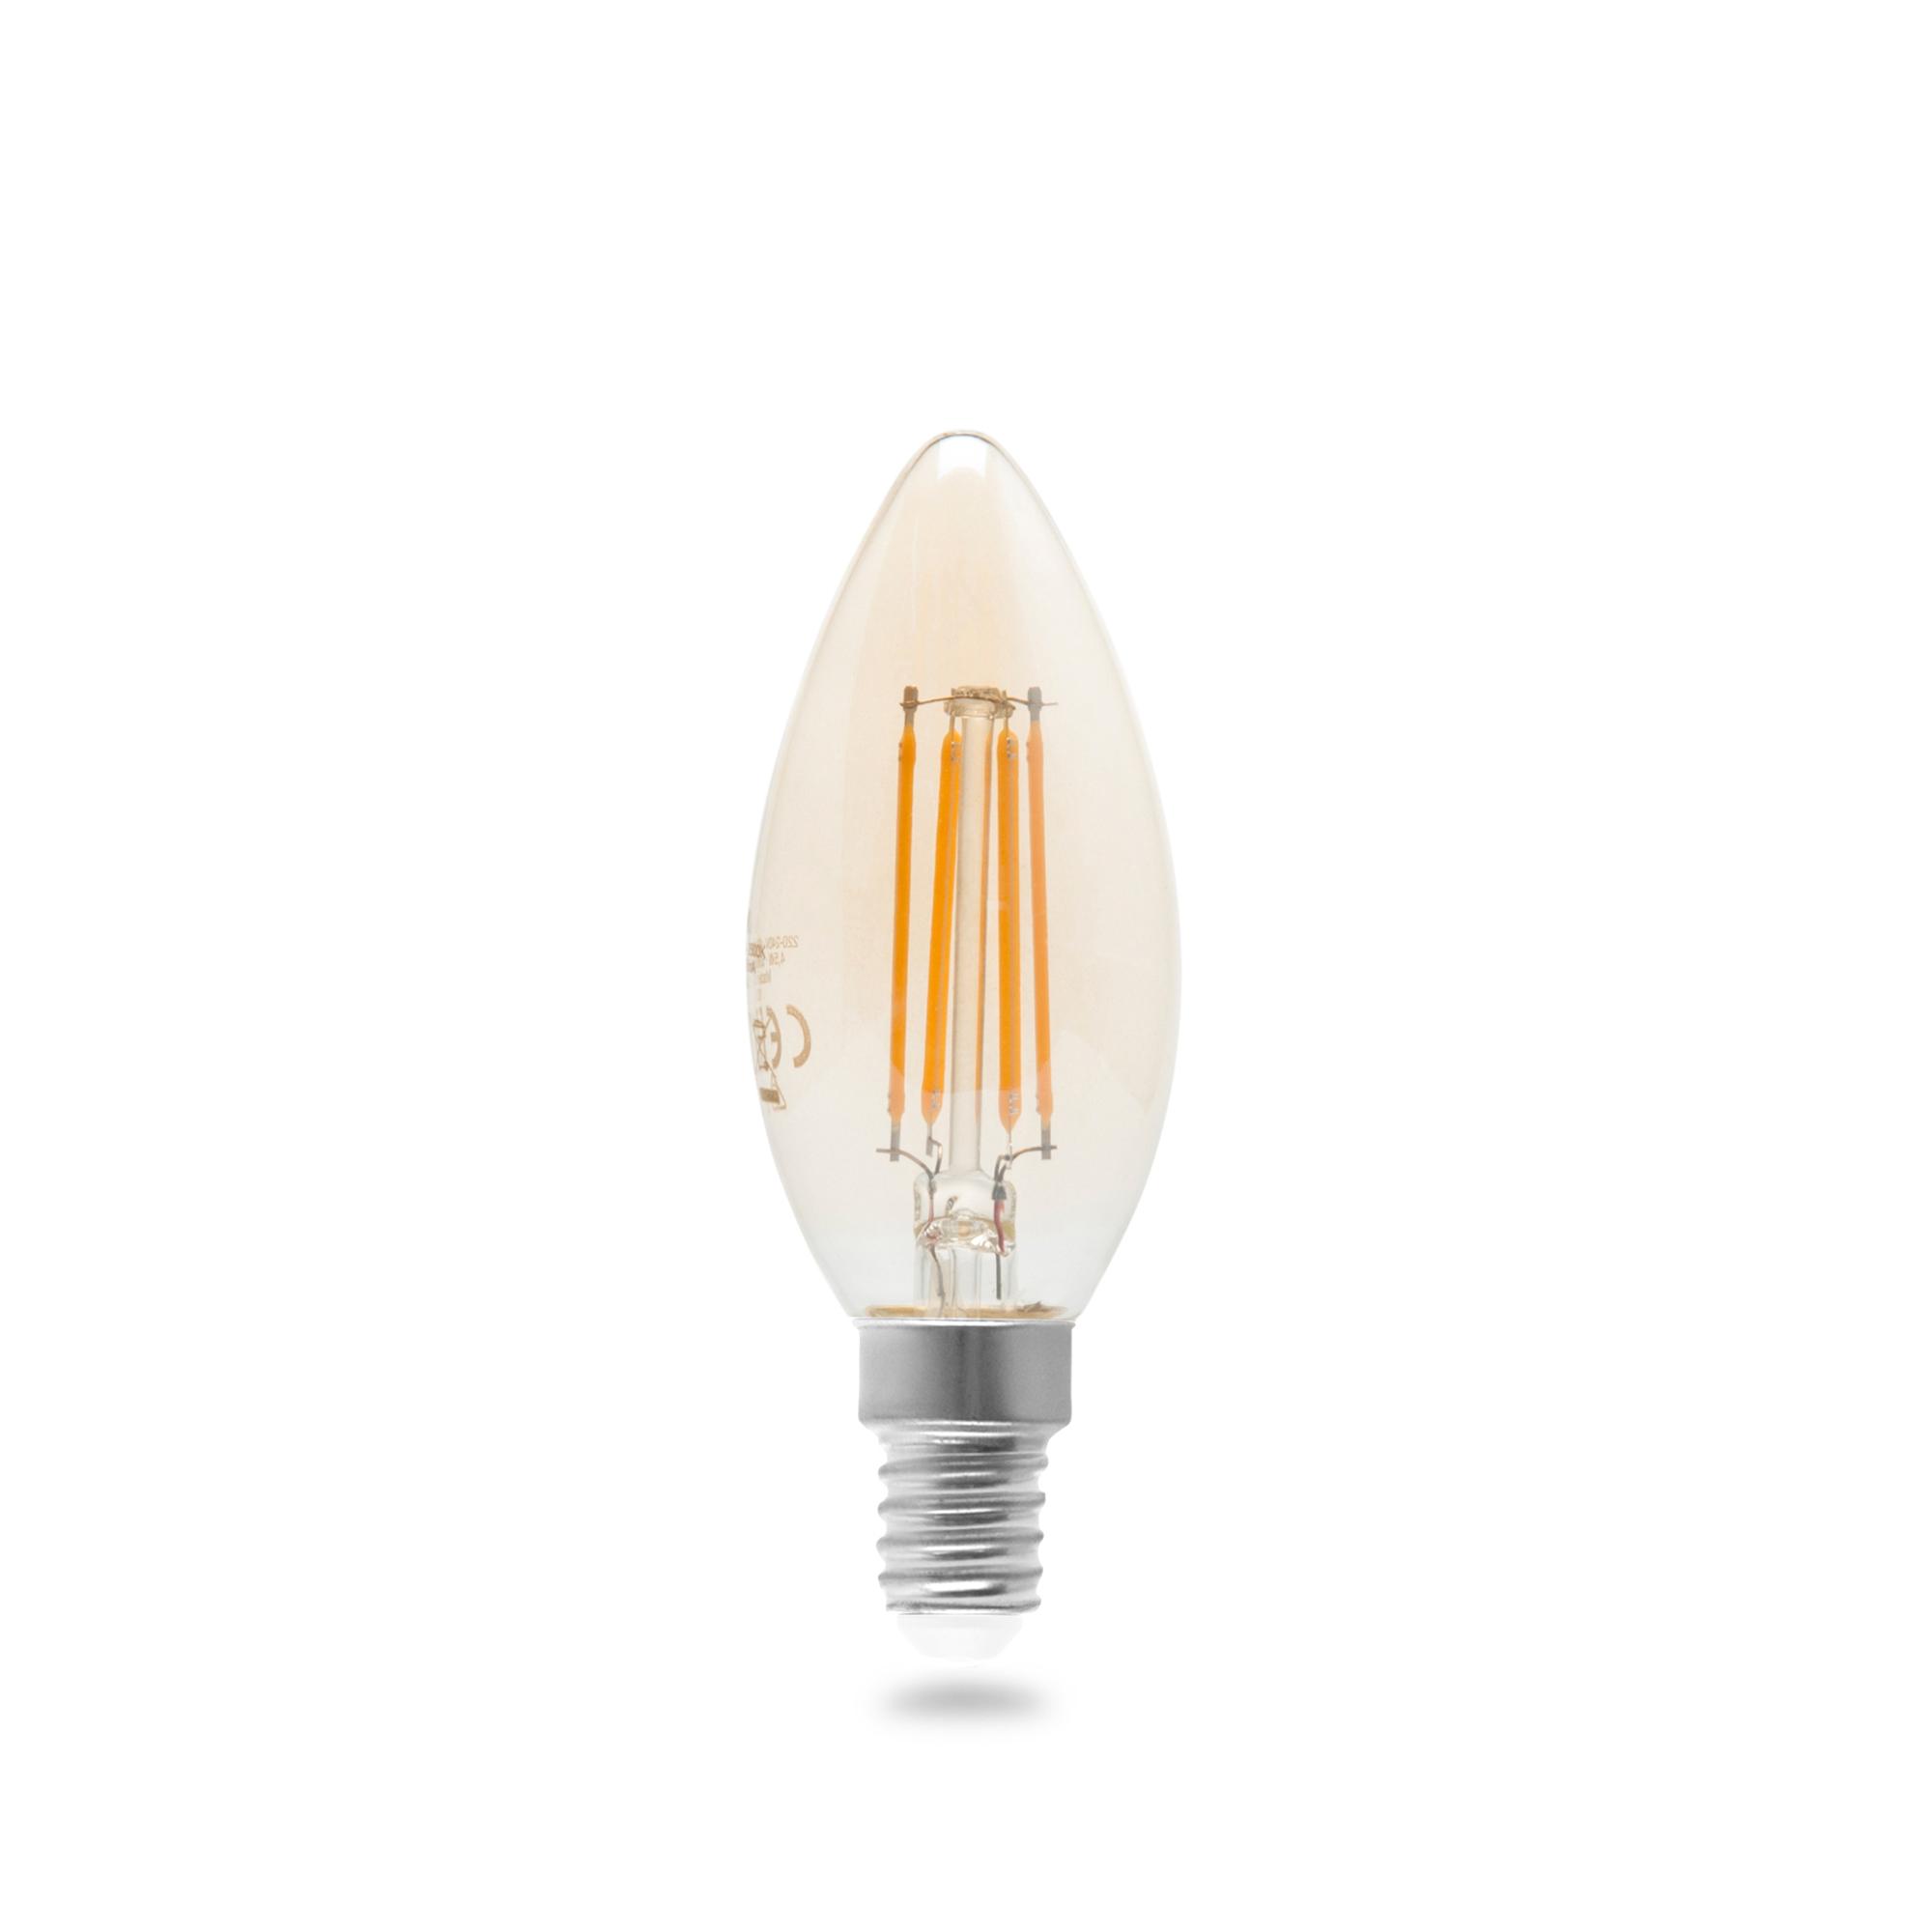 Orbus C37 4W Filament Bulb Amber E14 300Lm Ra80 220 - 240V/50Hz Ampul - 2200K Sarı Işık